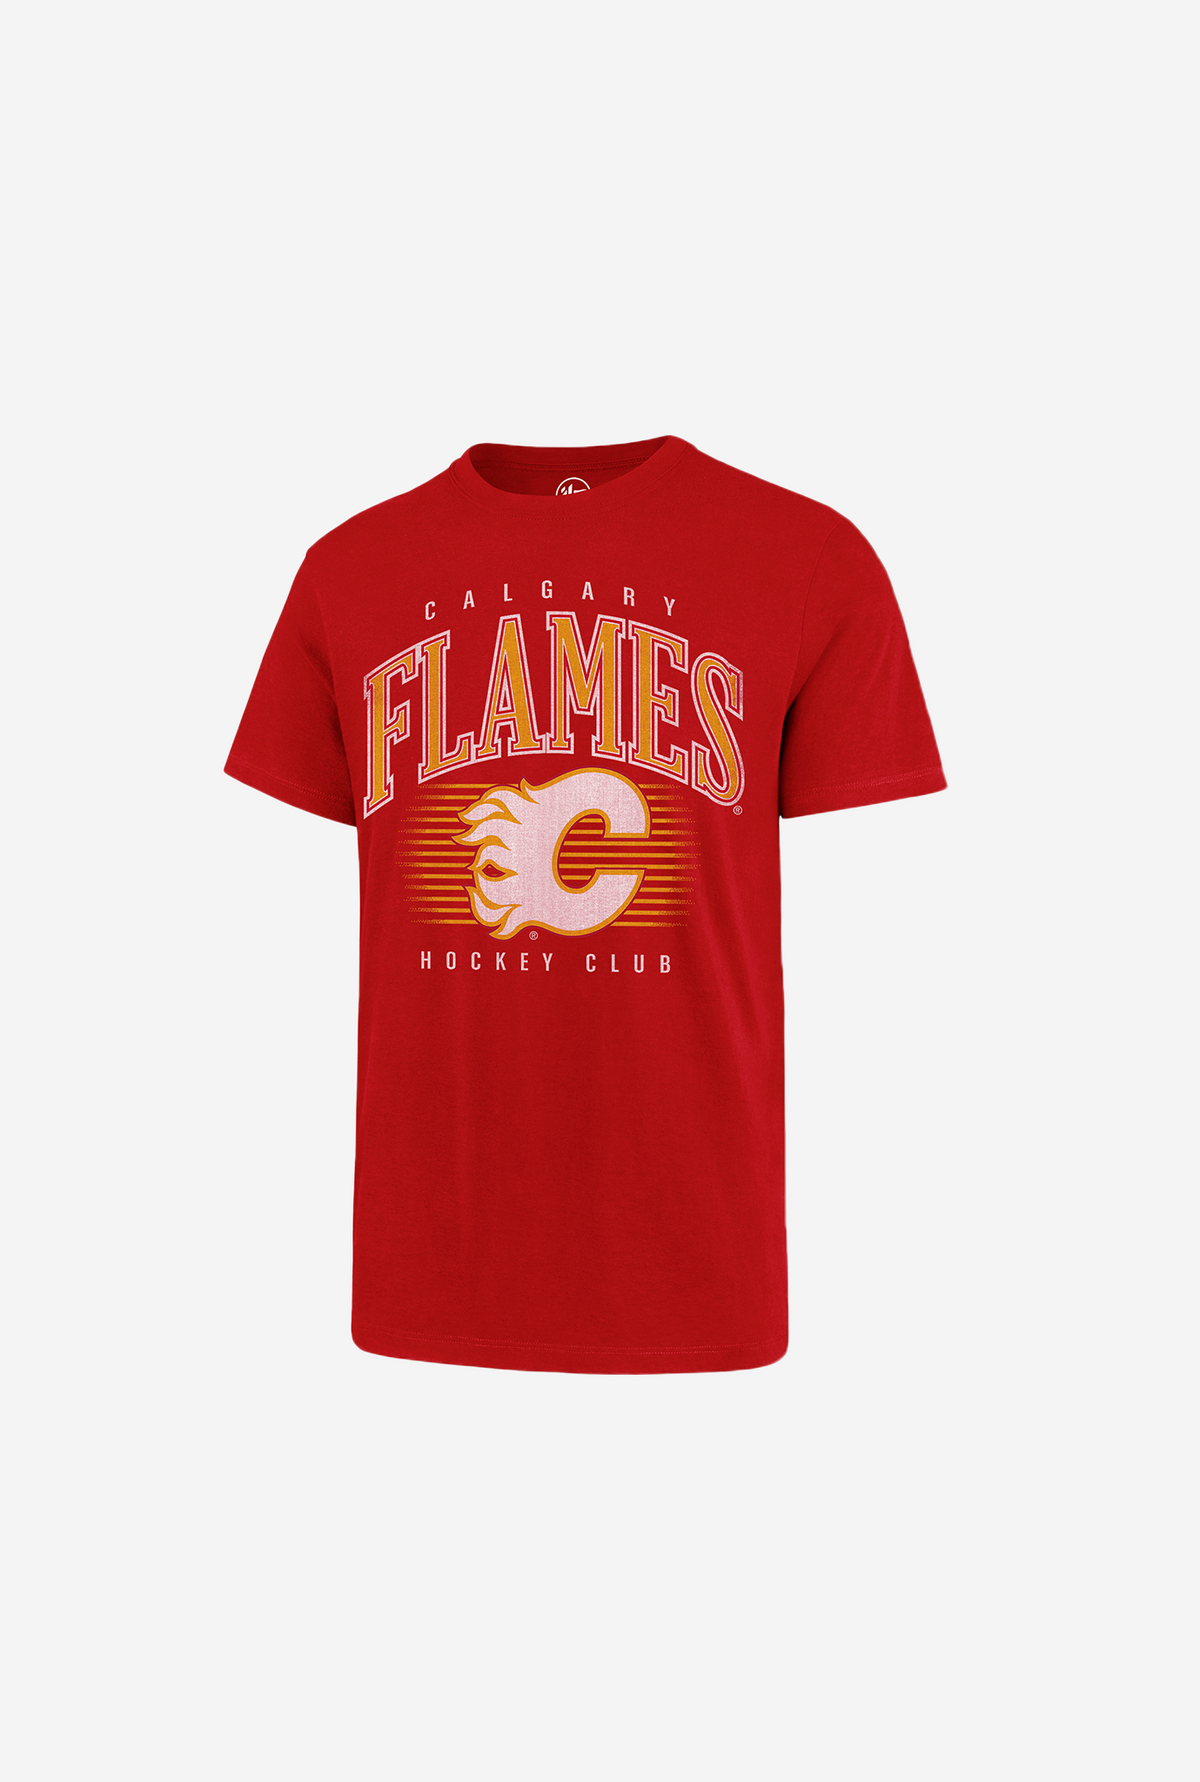 Calgary Flames Double Header T-Shirt